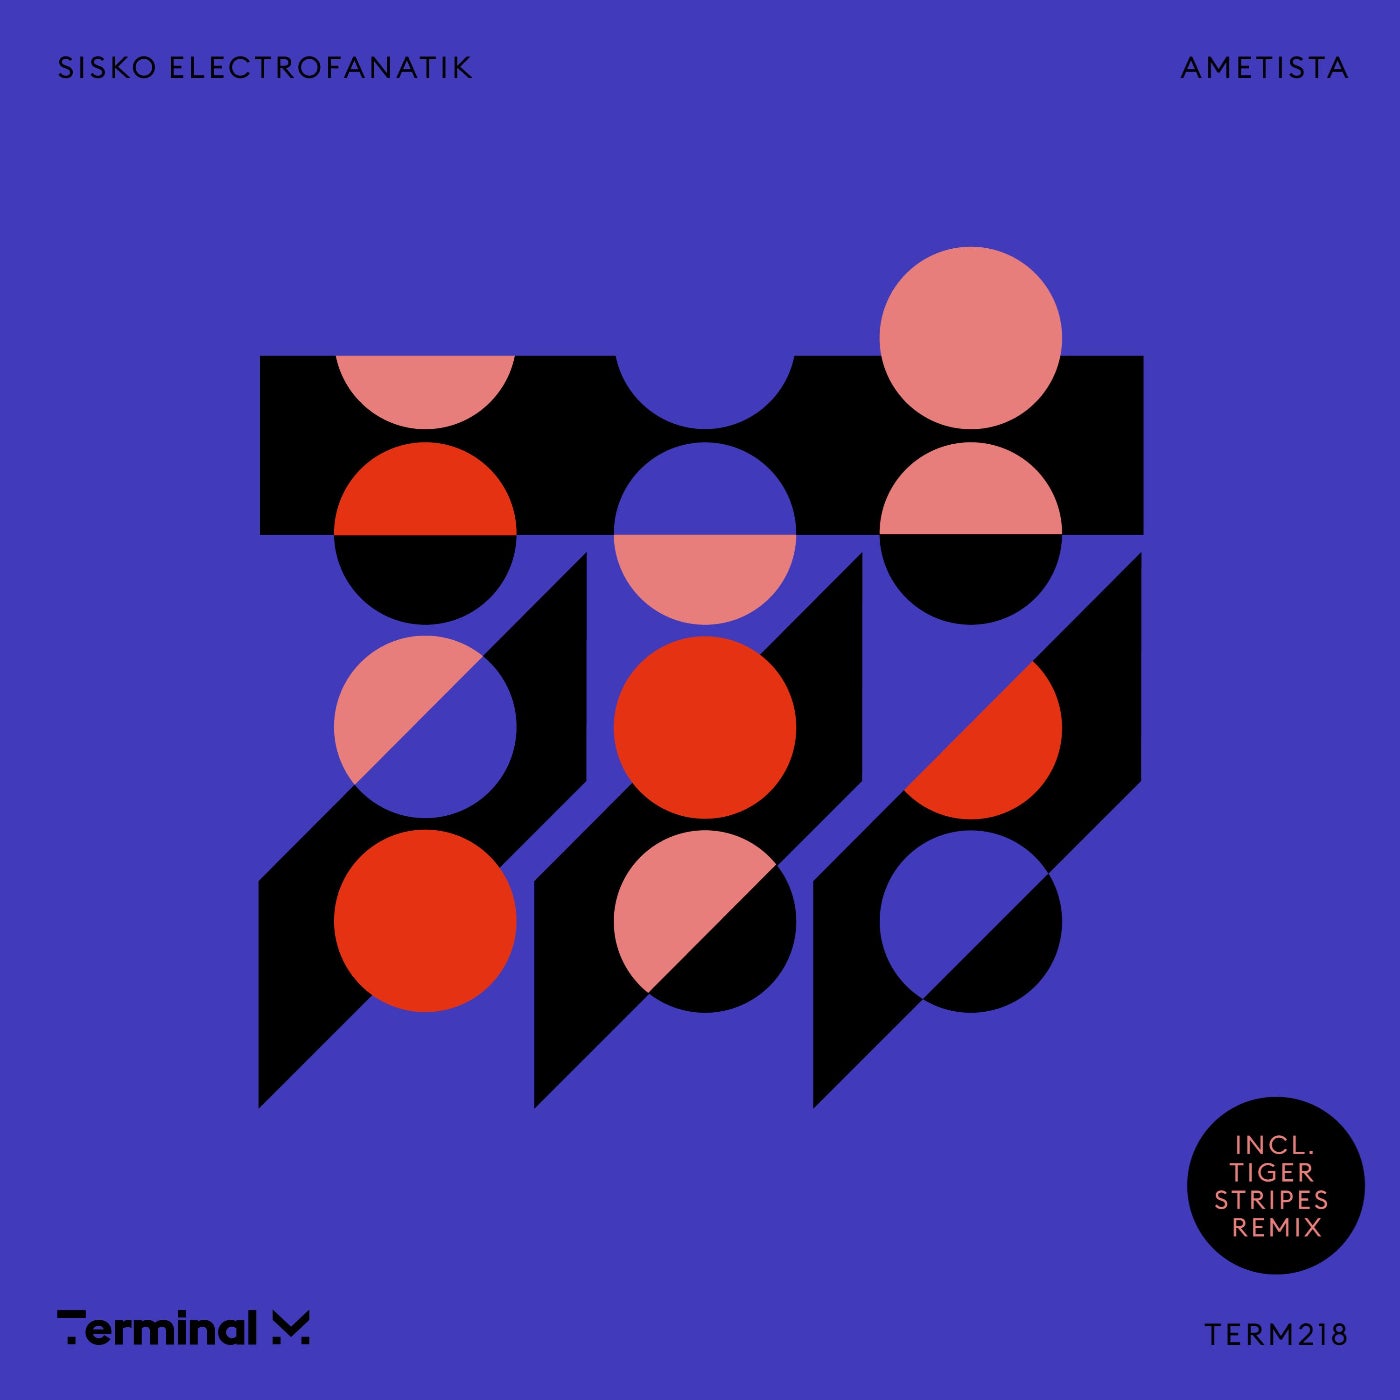 Sisko Electrofanatik - Ametista (tiger Stripes Remix) on Revolution Radio